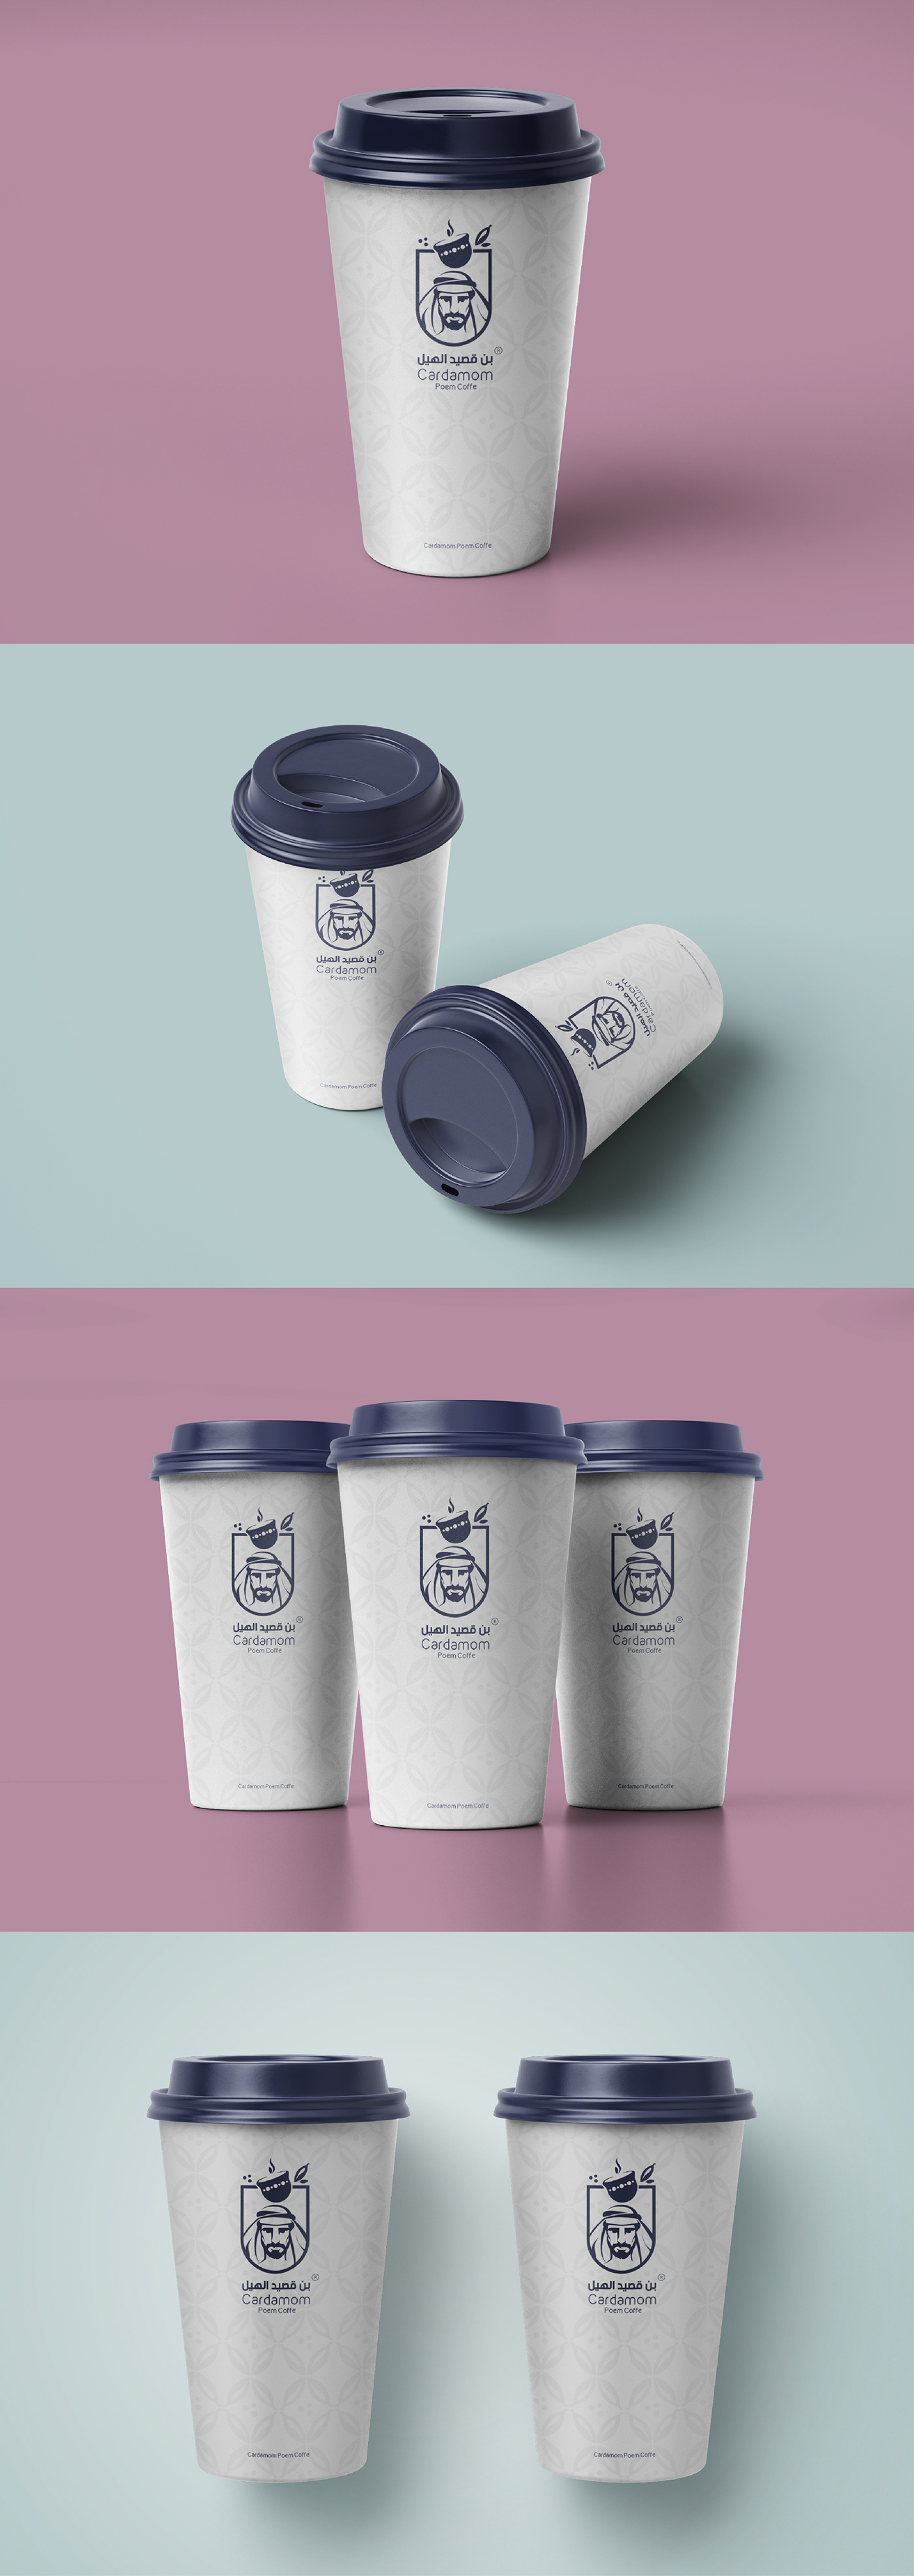 Coffee brand logo cardamom arabic identity package panton creative idea